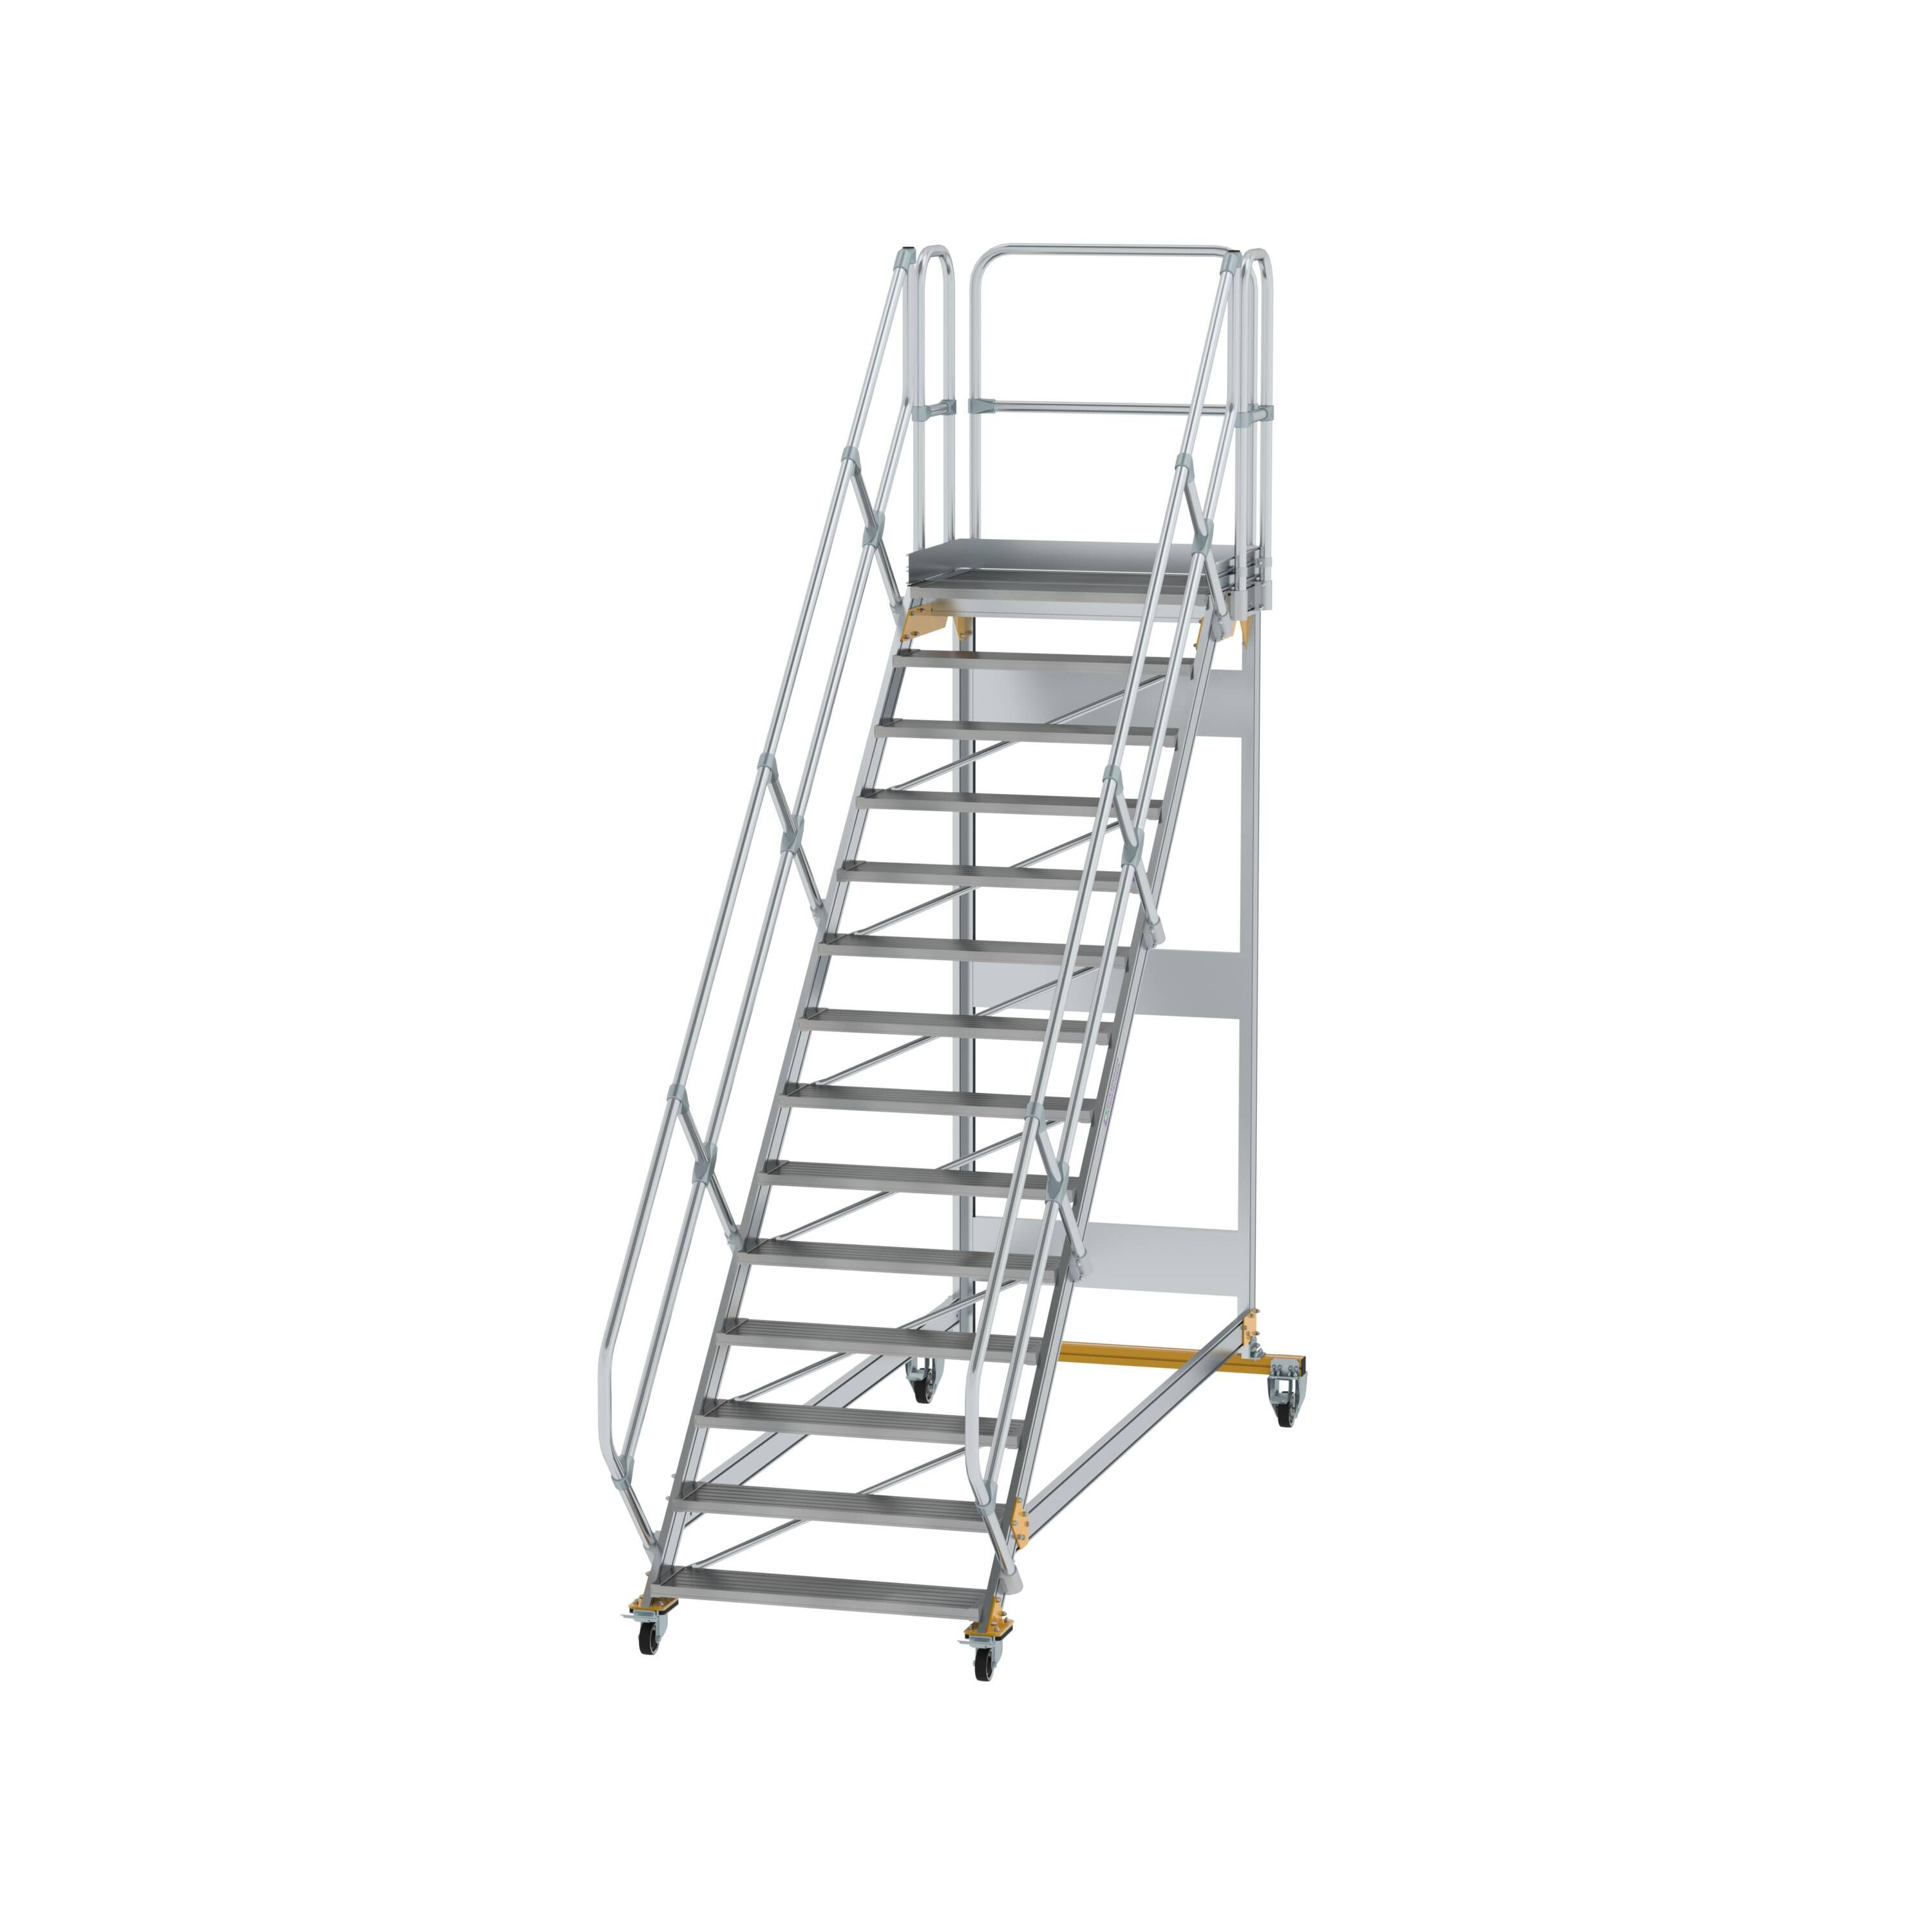 Plattformtreppe 45° fahrbar Stufenbreite 1000mm 14 Stufen Aluminium geriffelt